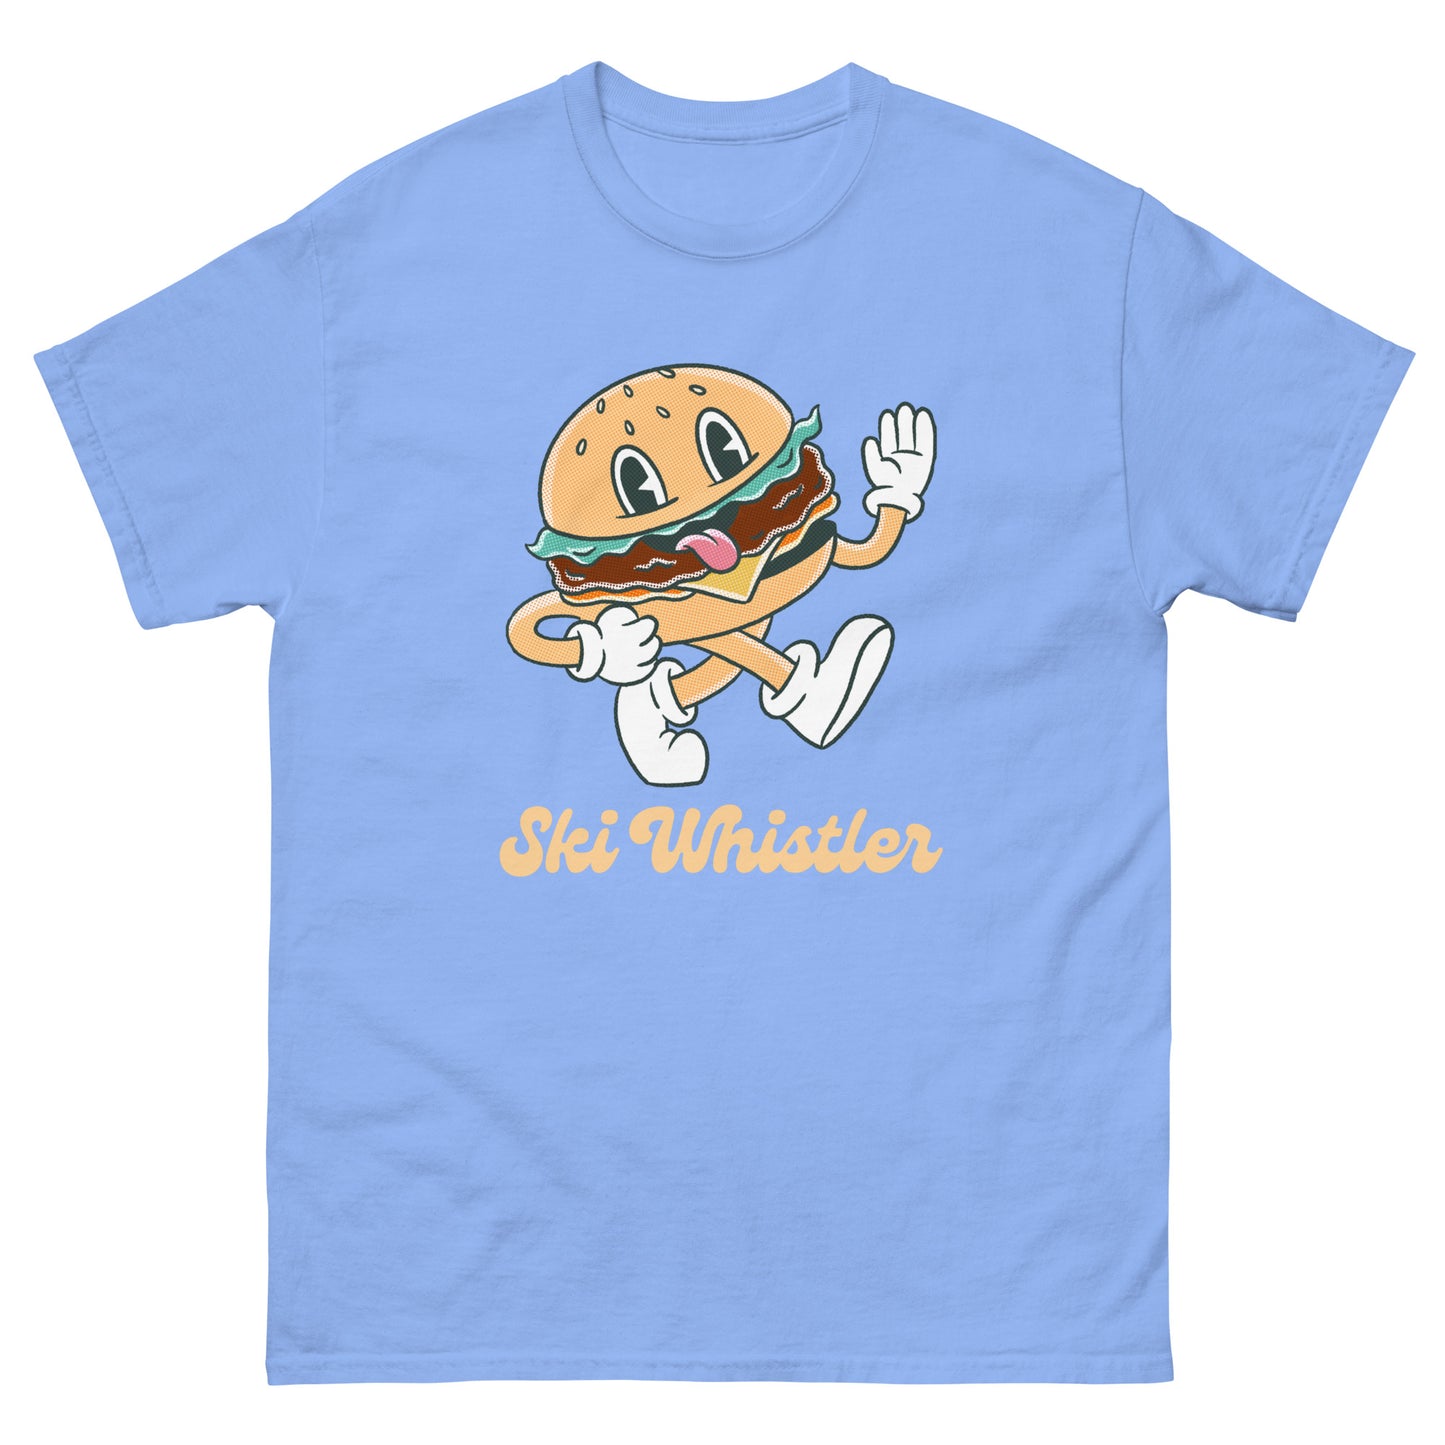 Ski Whistler Hamburger Man T-shirt printed by Whistler Shirts